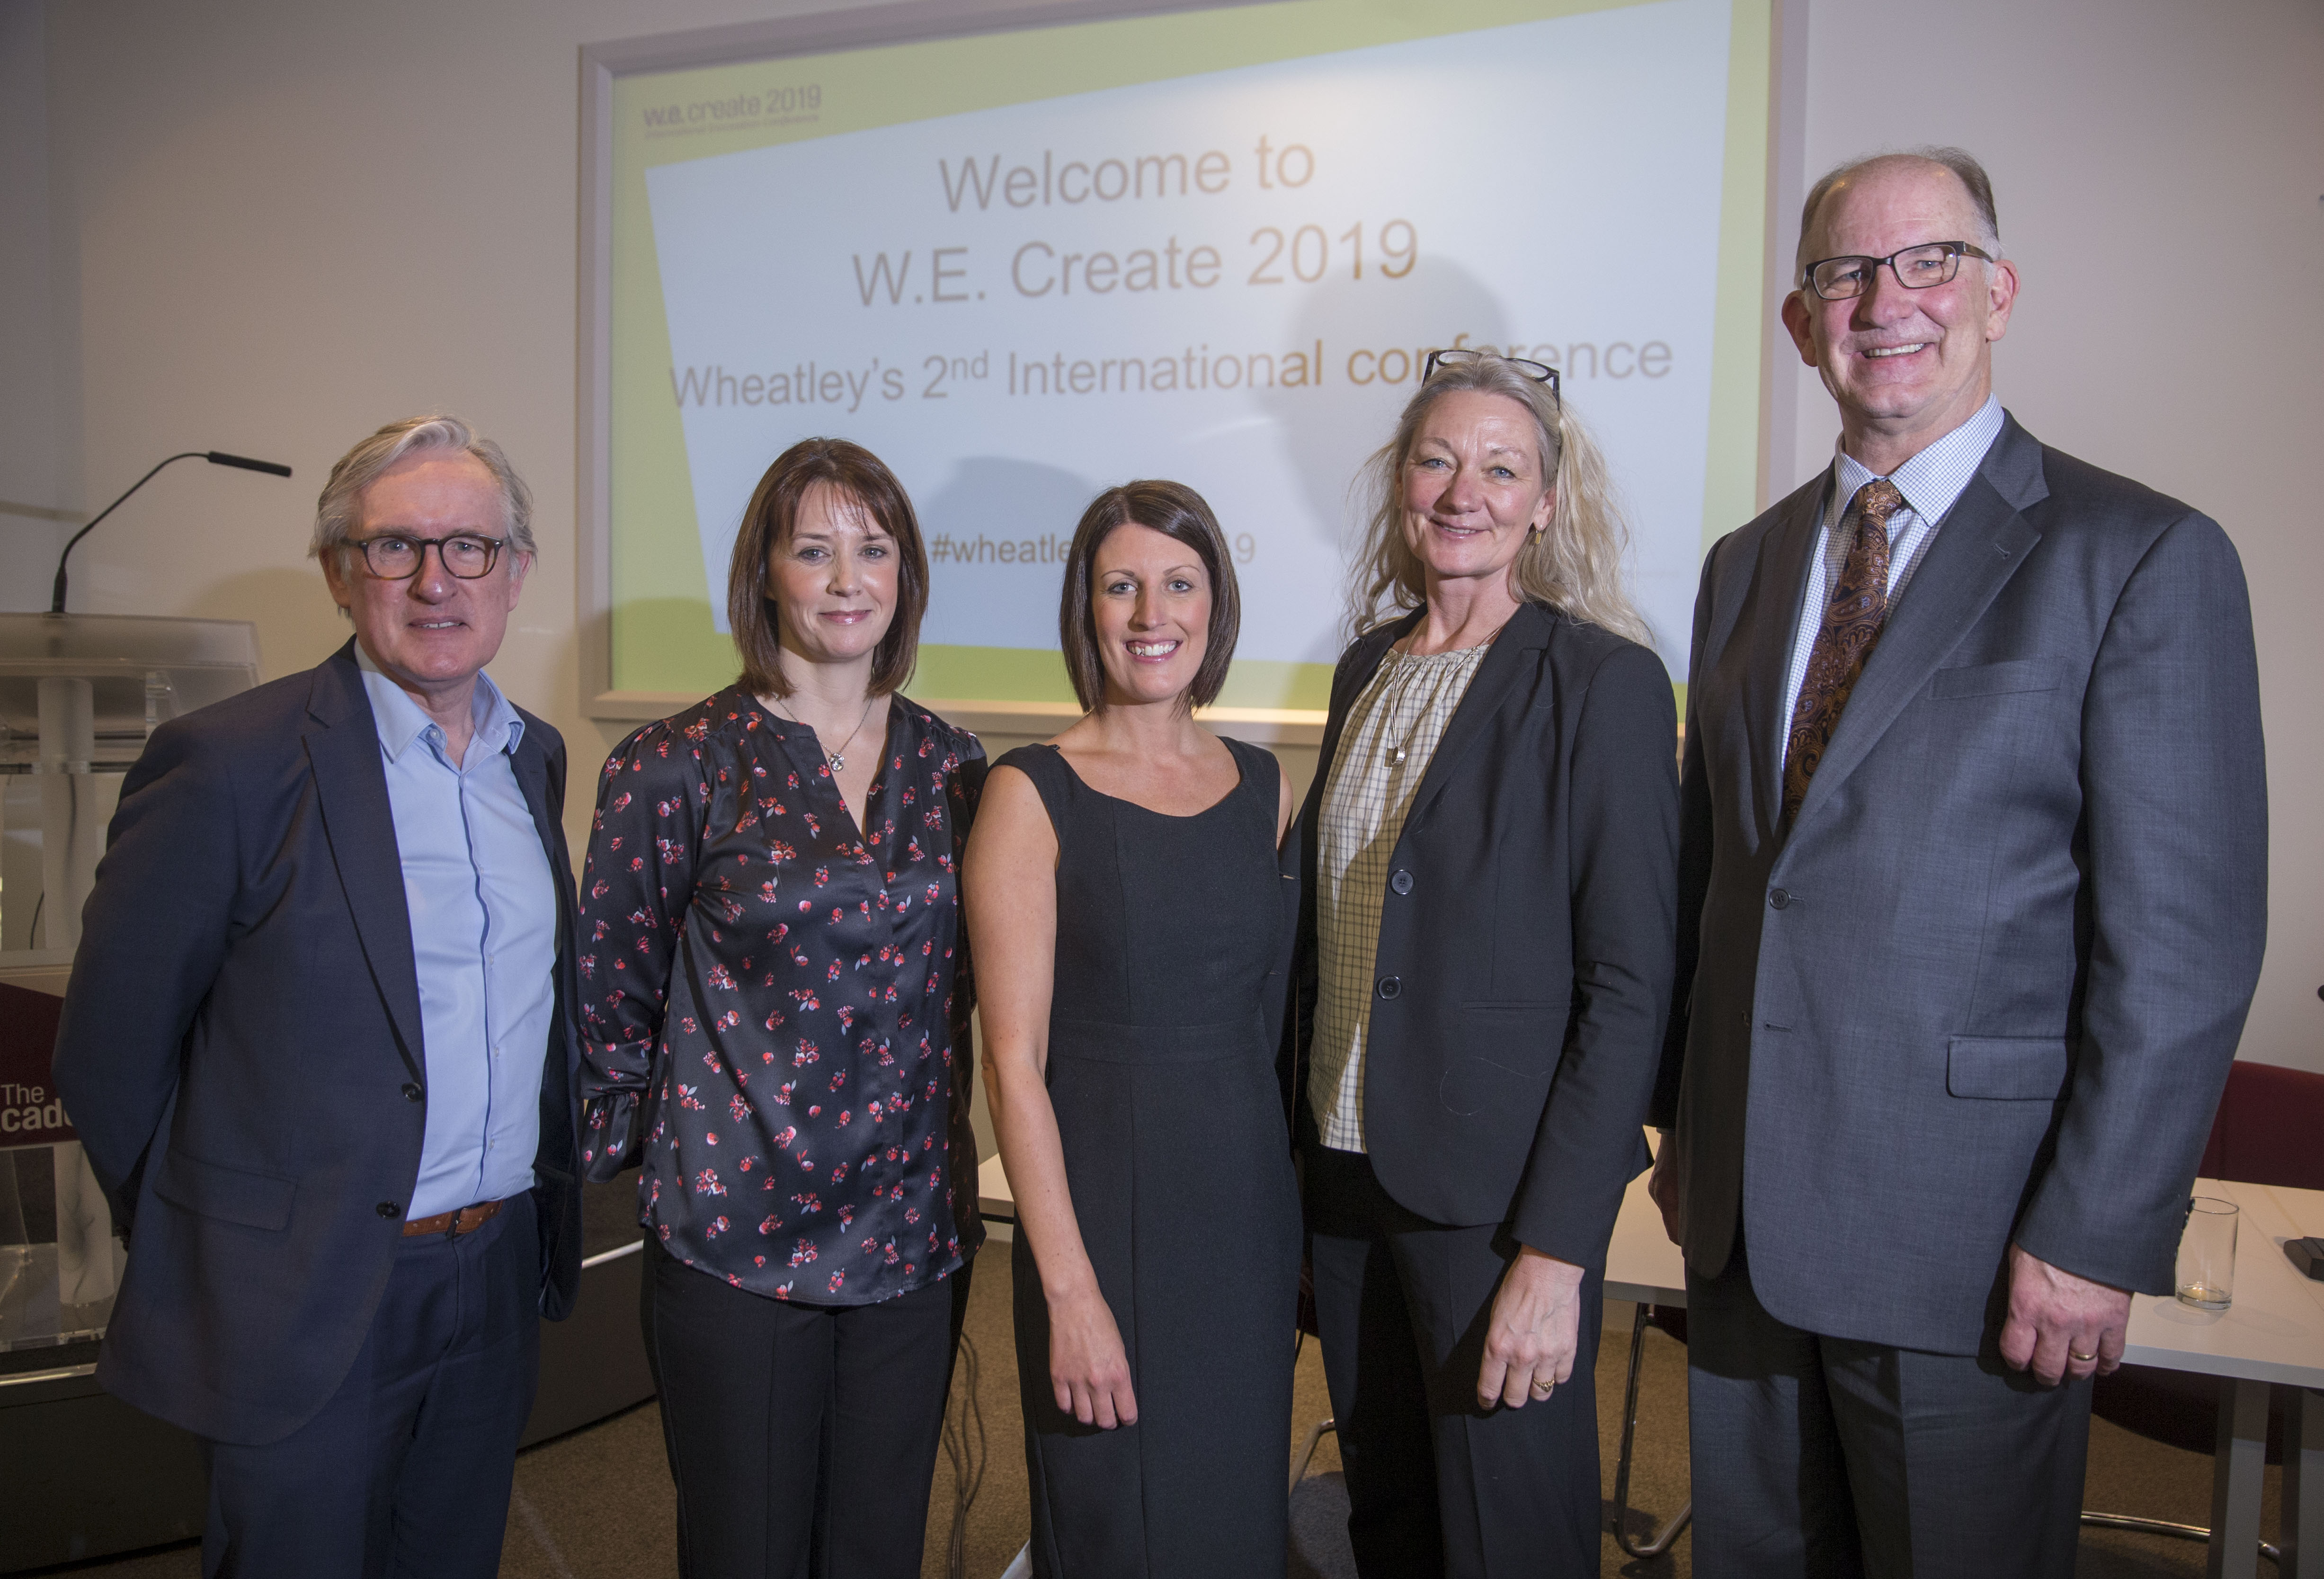 Innovation unlocks creative thinking at Wheatley Group